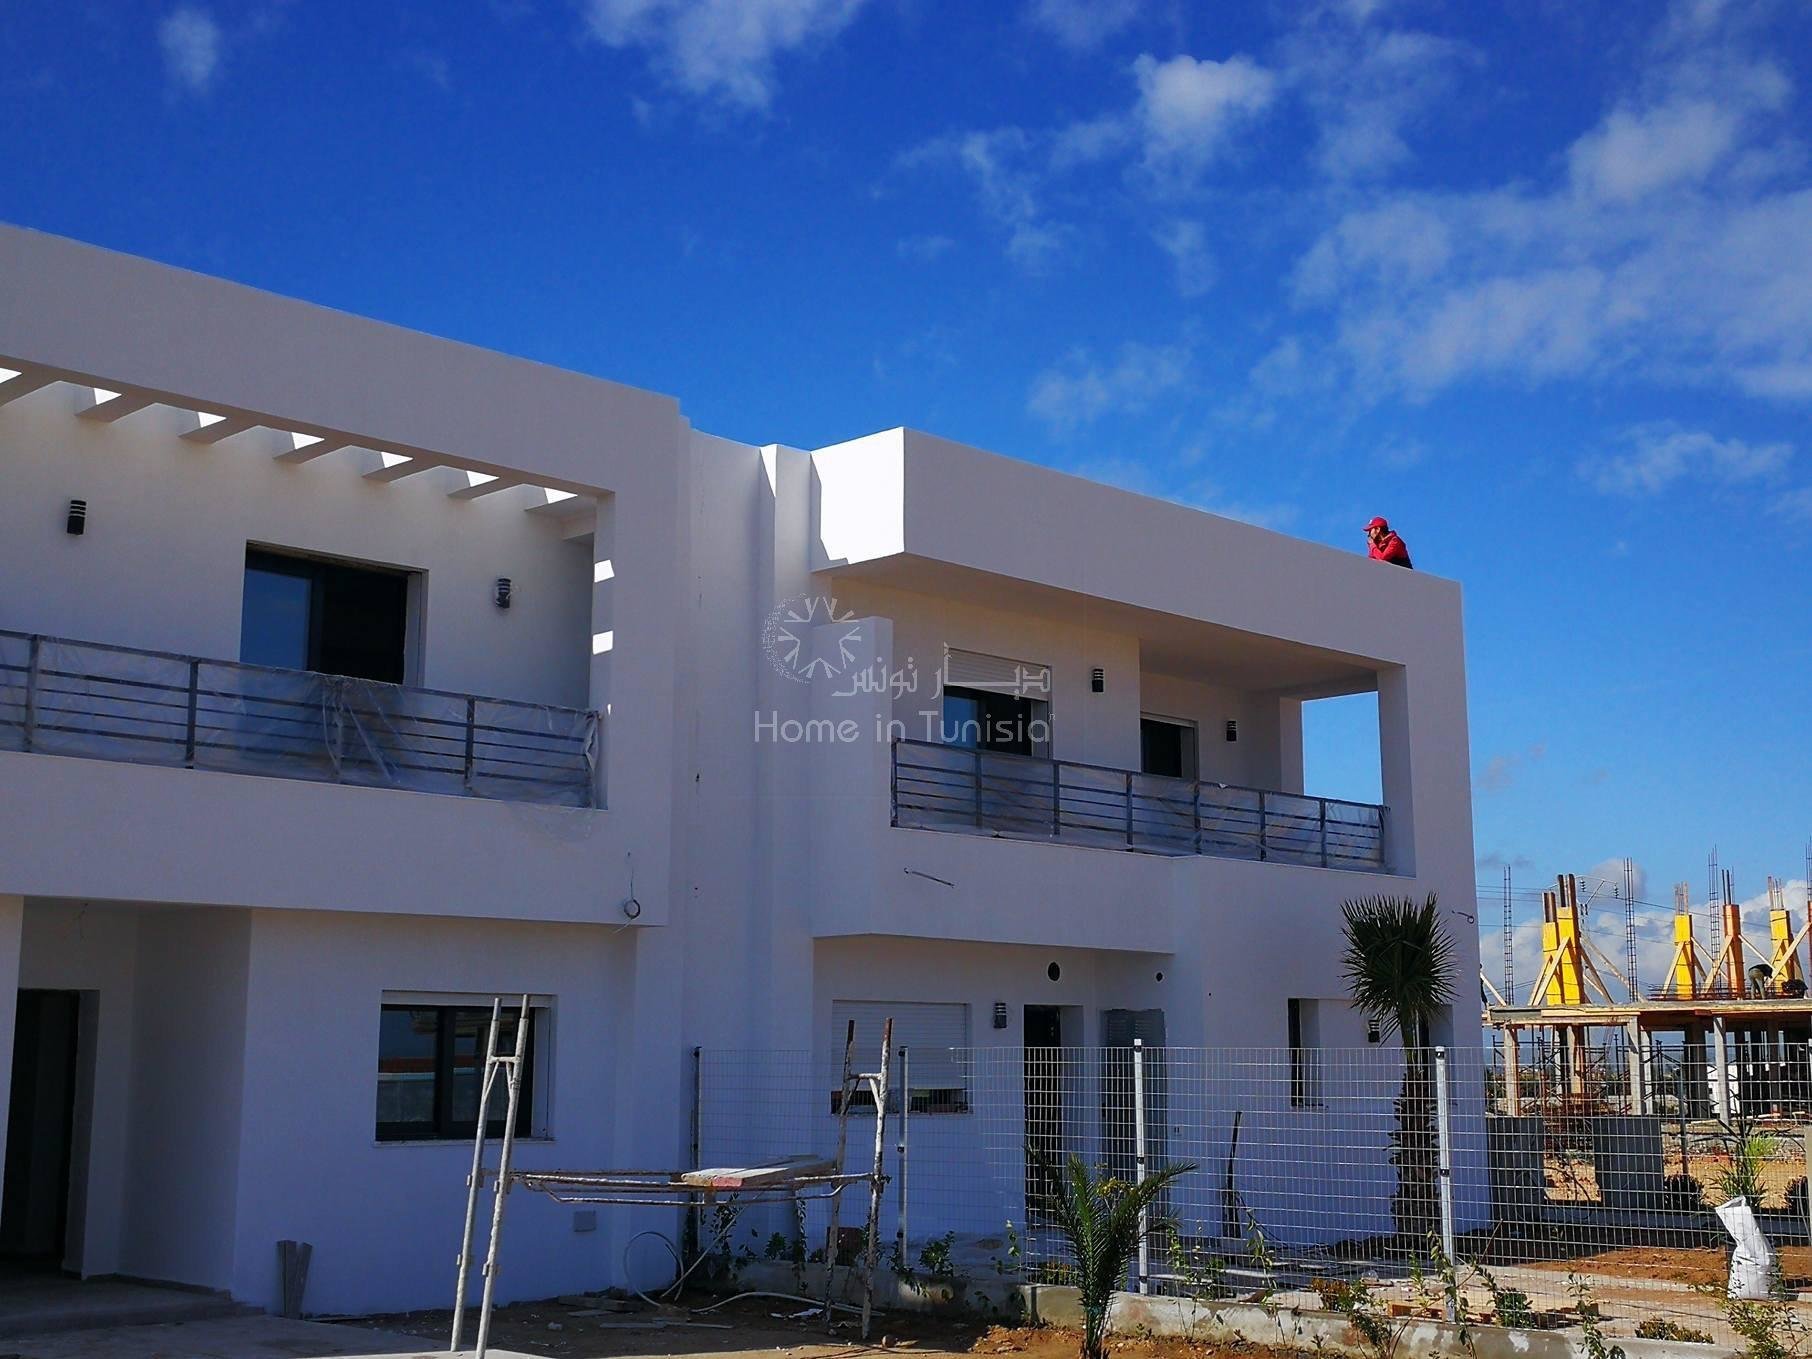 Golf résidence villa golf Hermes isolée 21, avec vue directe face au golf Tunis Bay